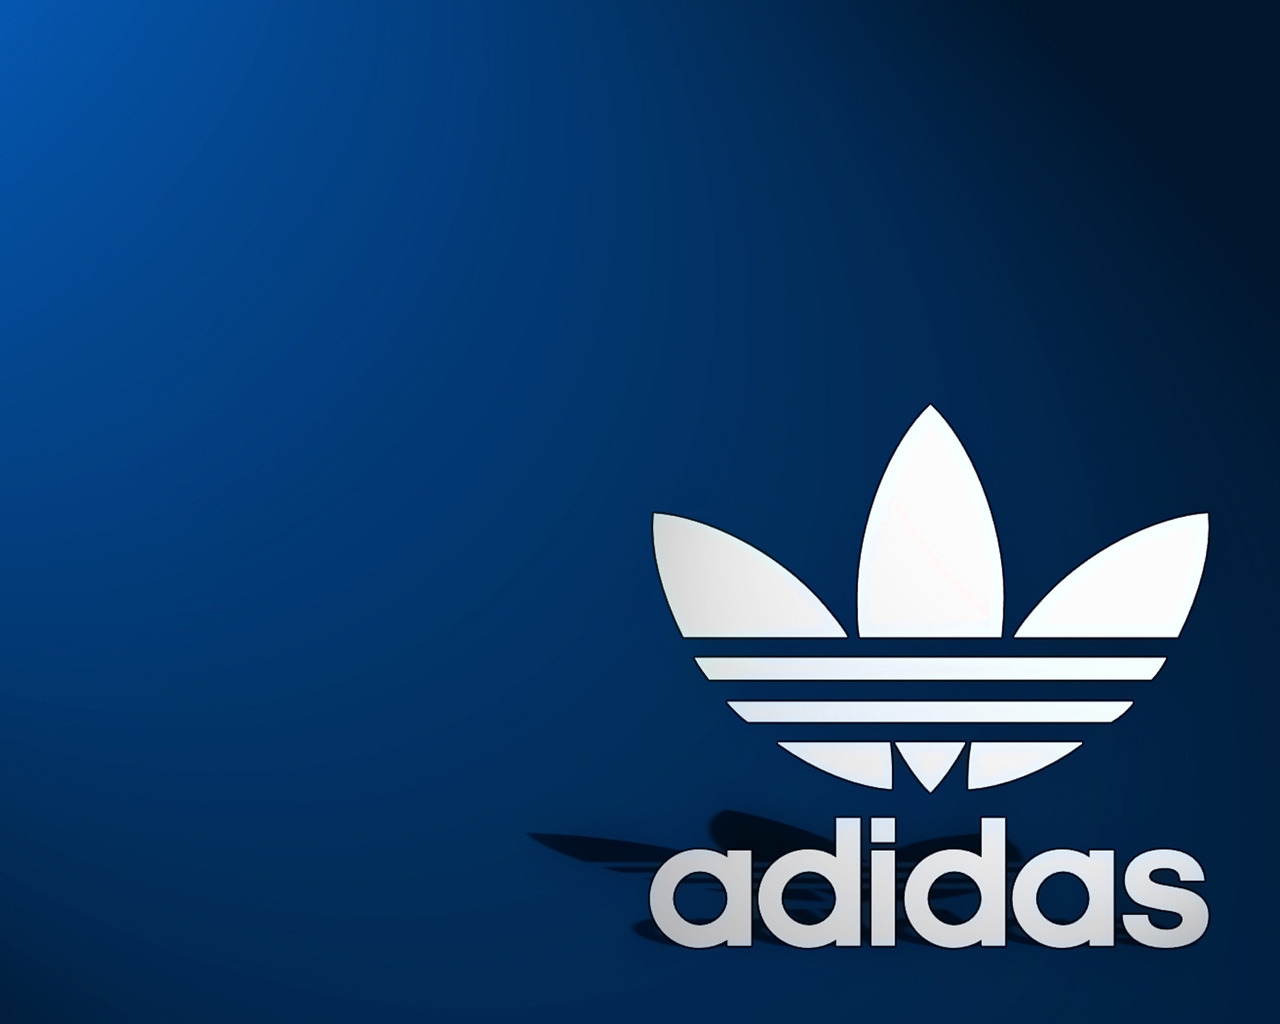 Adidas Logo Blue Background for 1280 x 1024 resolution